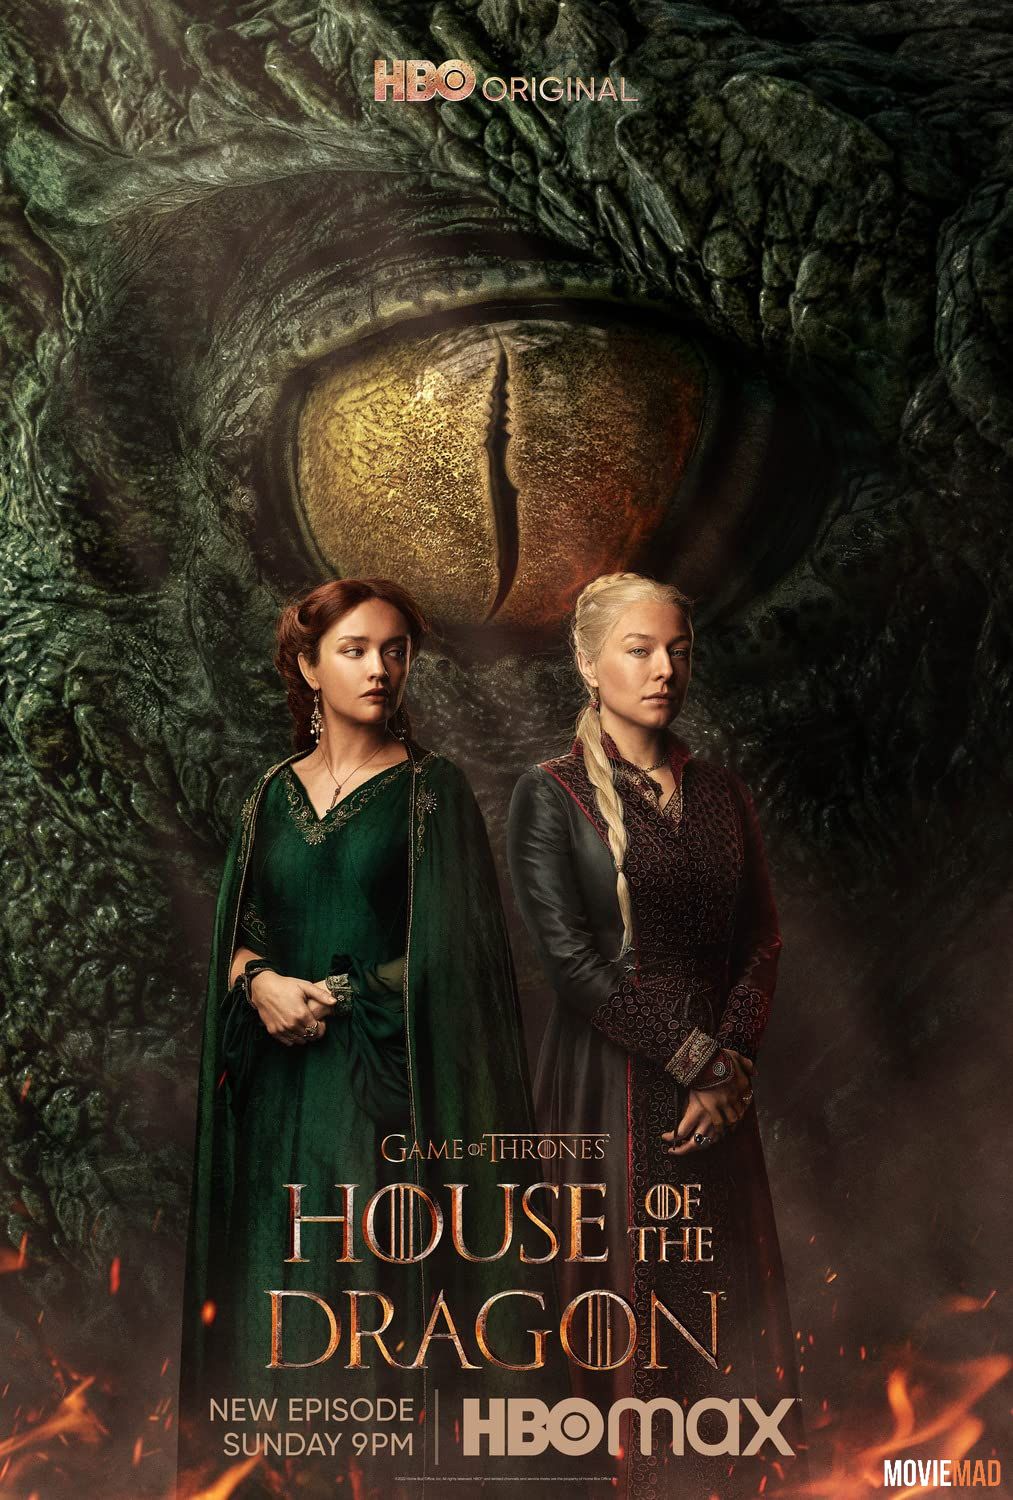 House Of The Dragon S01E10 (2022) English HBOMAX HDRip 720p 480p